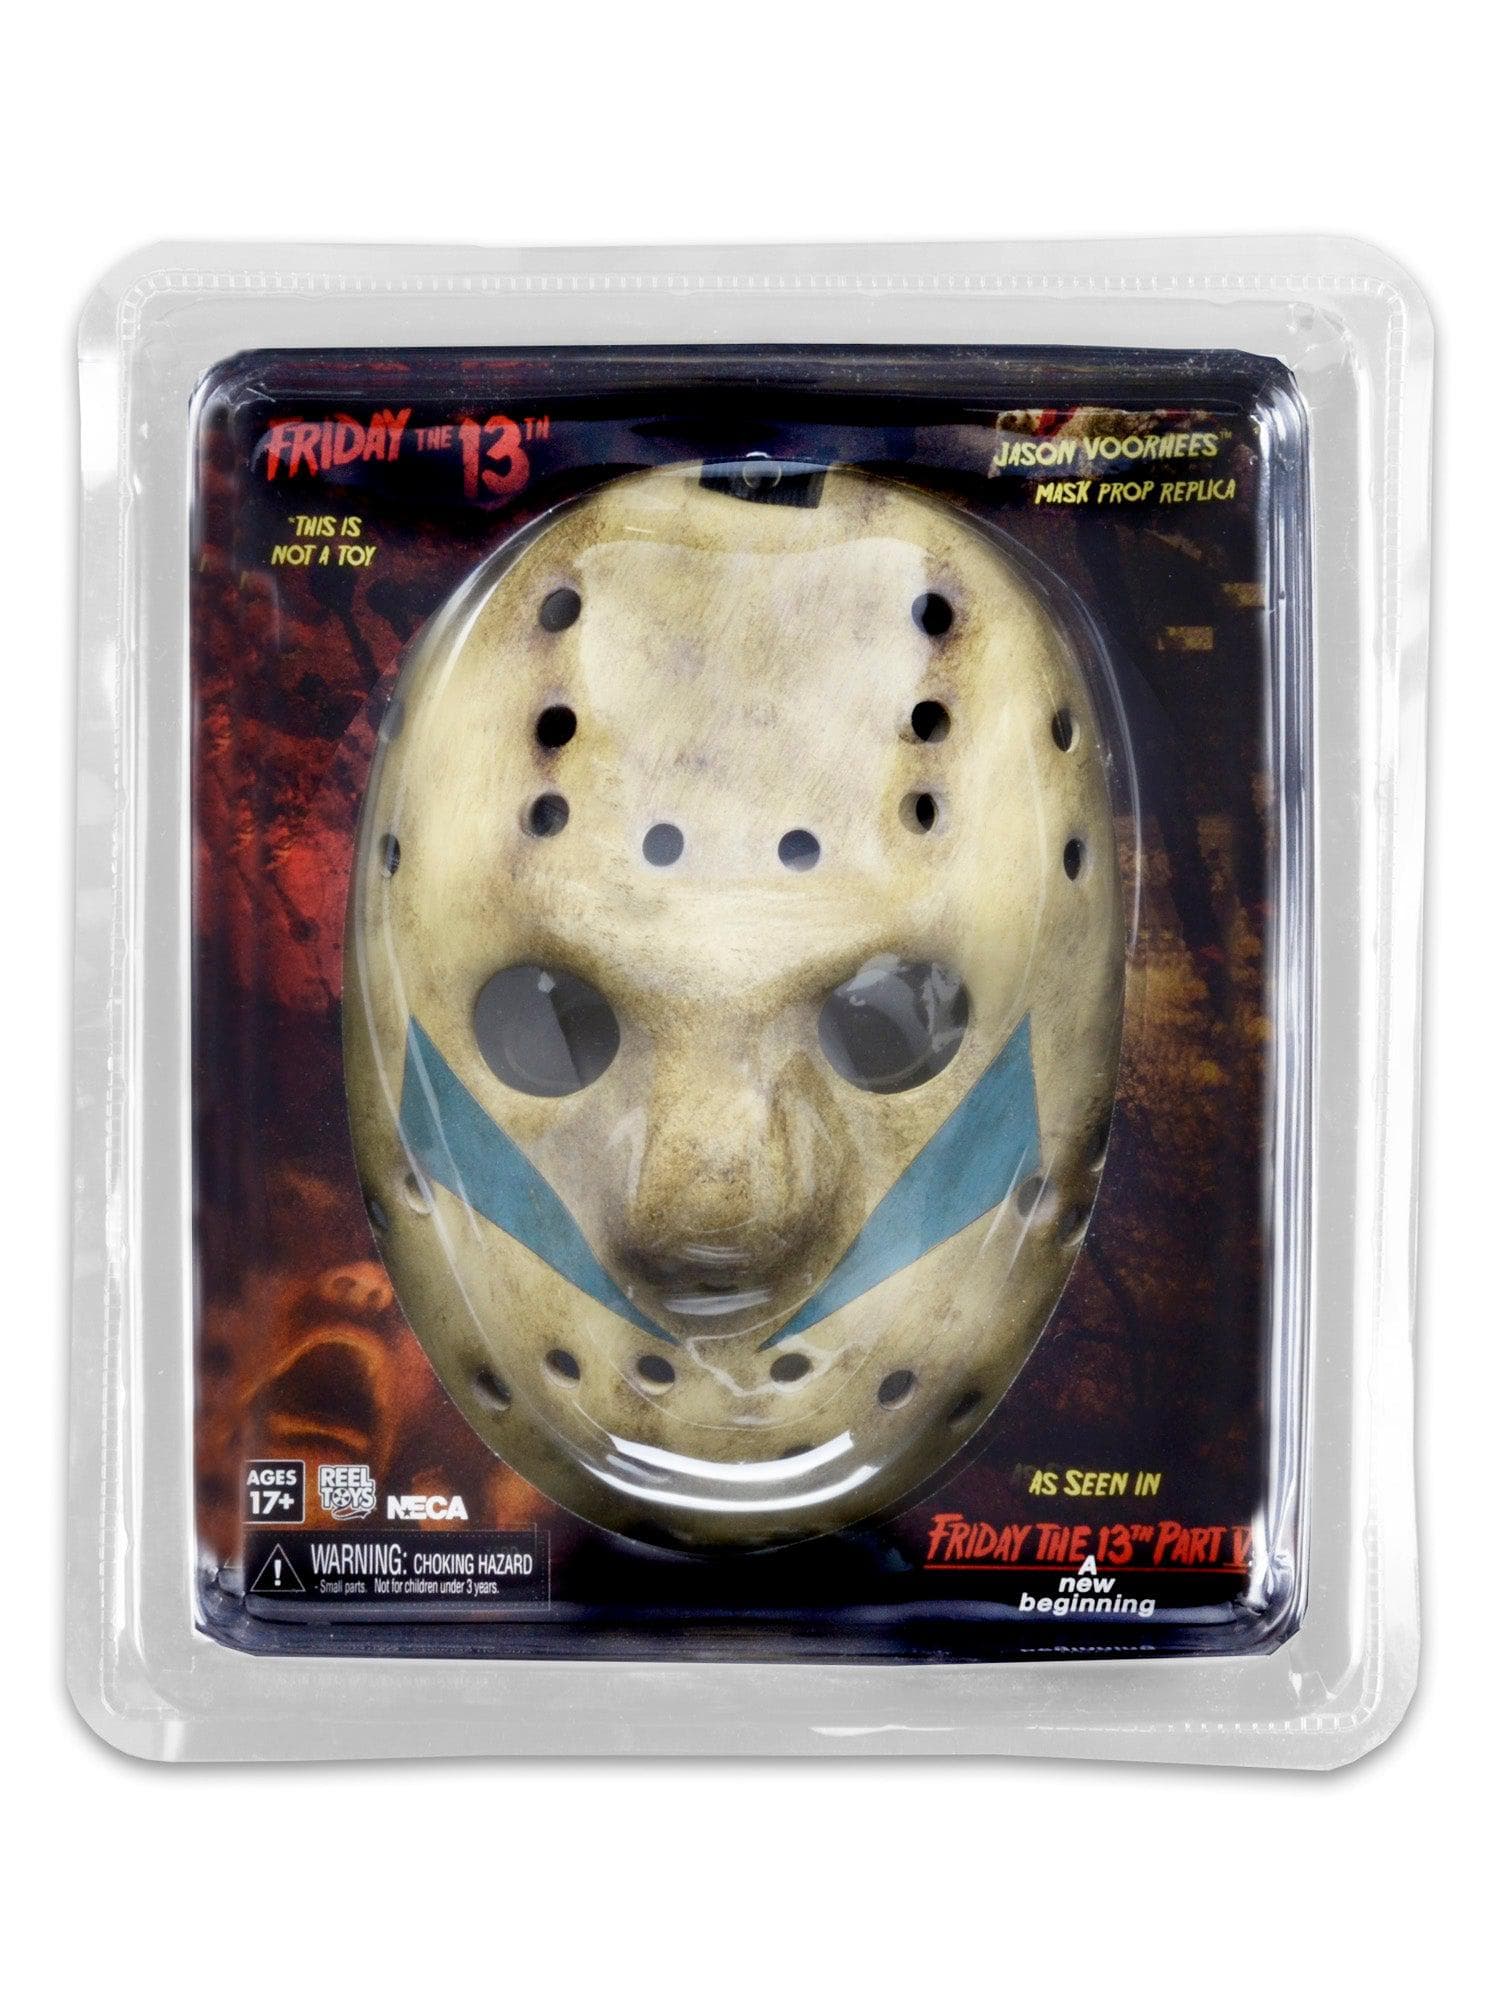 NECA - Friday the 13th - Prop Replica - Jason Mask Part 5 - costumes.com